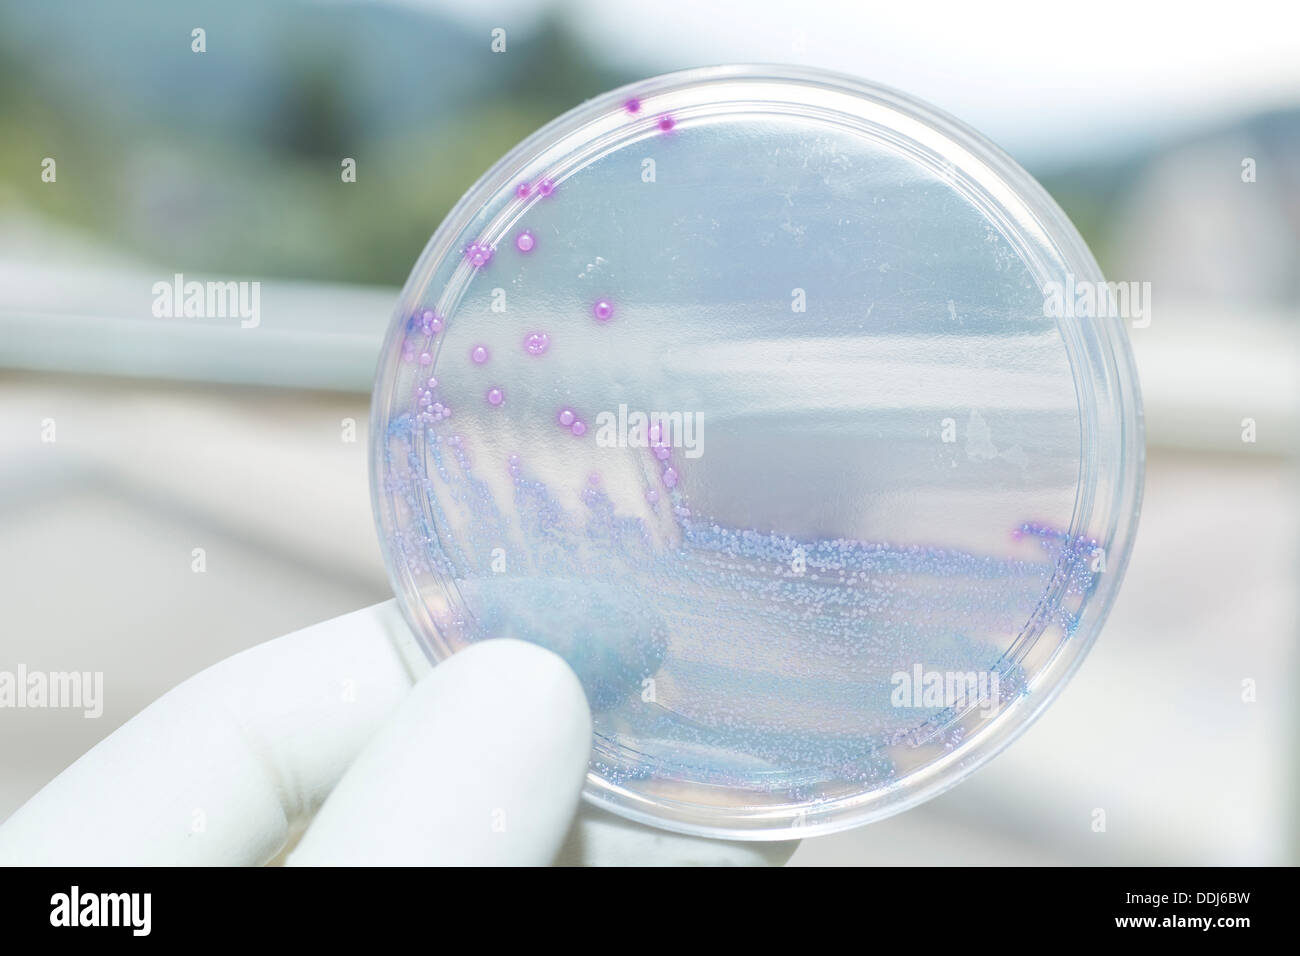 Germania, Freiburg, mano umana tenendo piastra petri con batteri, close up Foto Stock